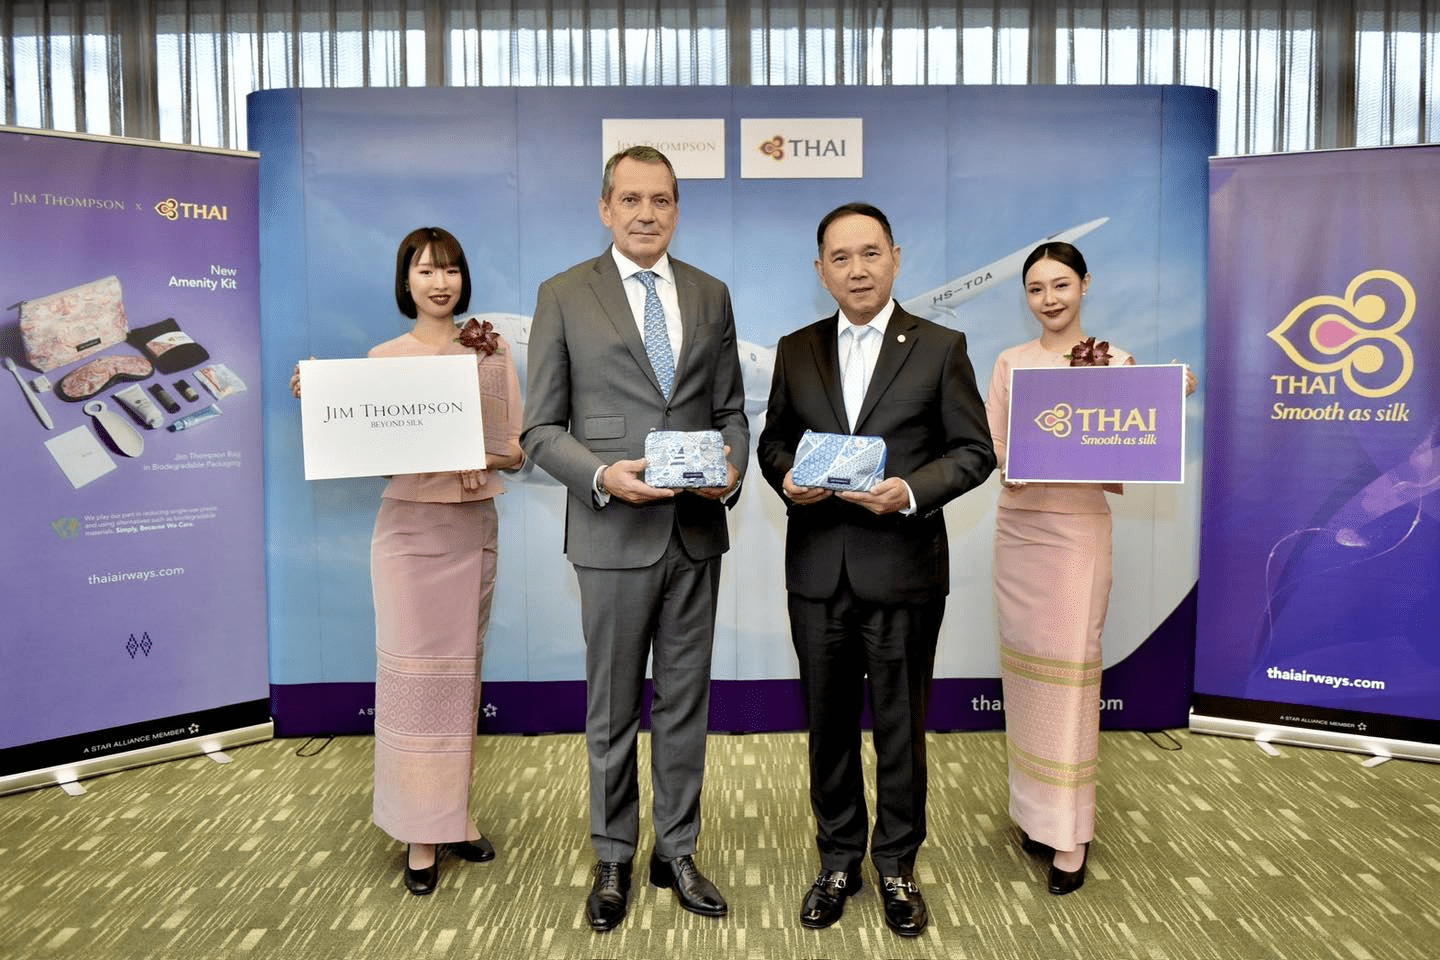 Thai Airways and Jim Thompson staff with new amenity kit range.